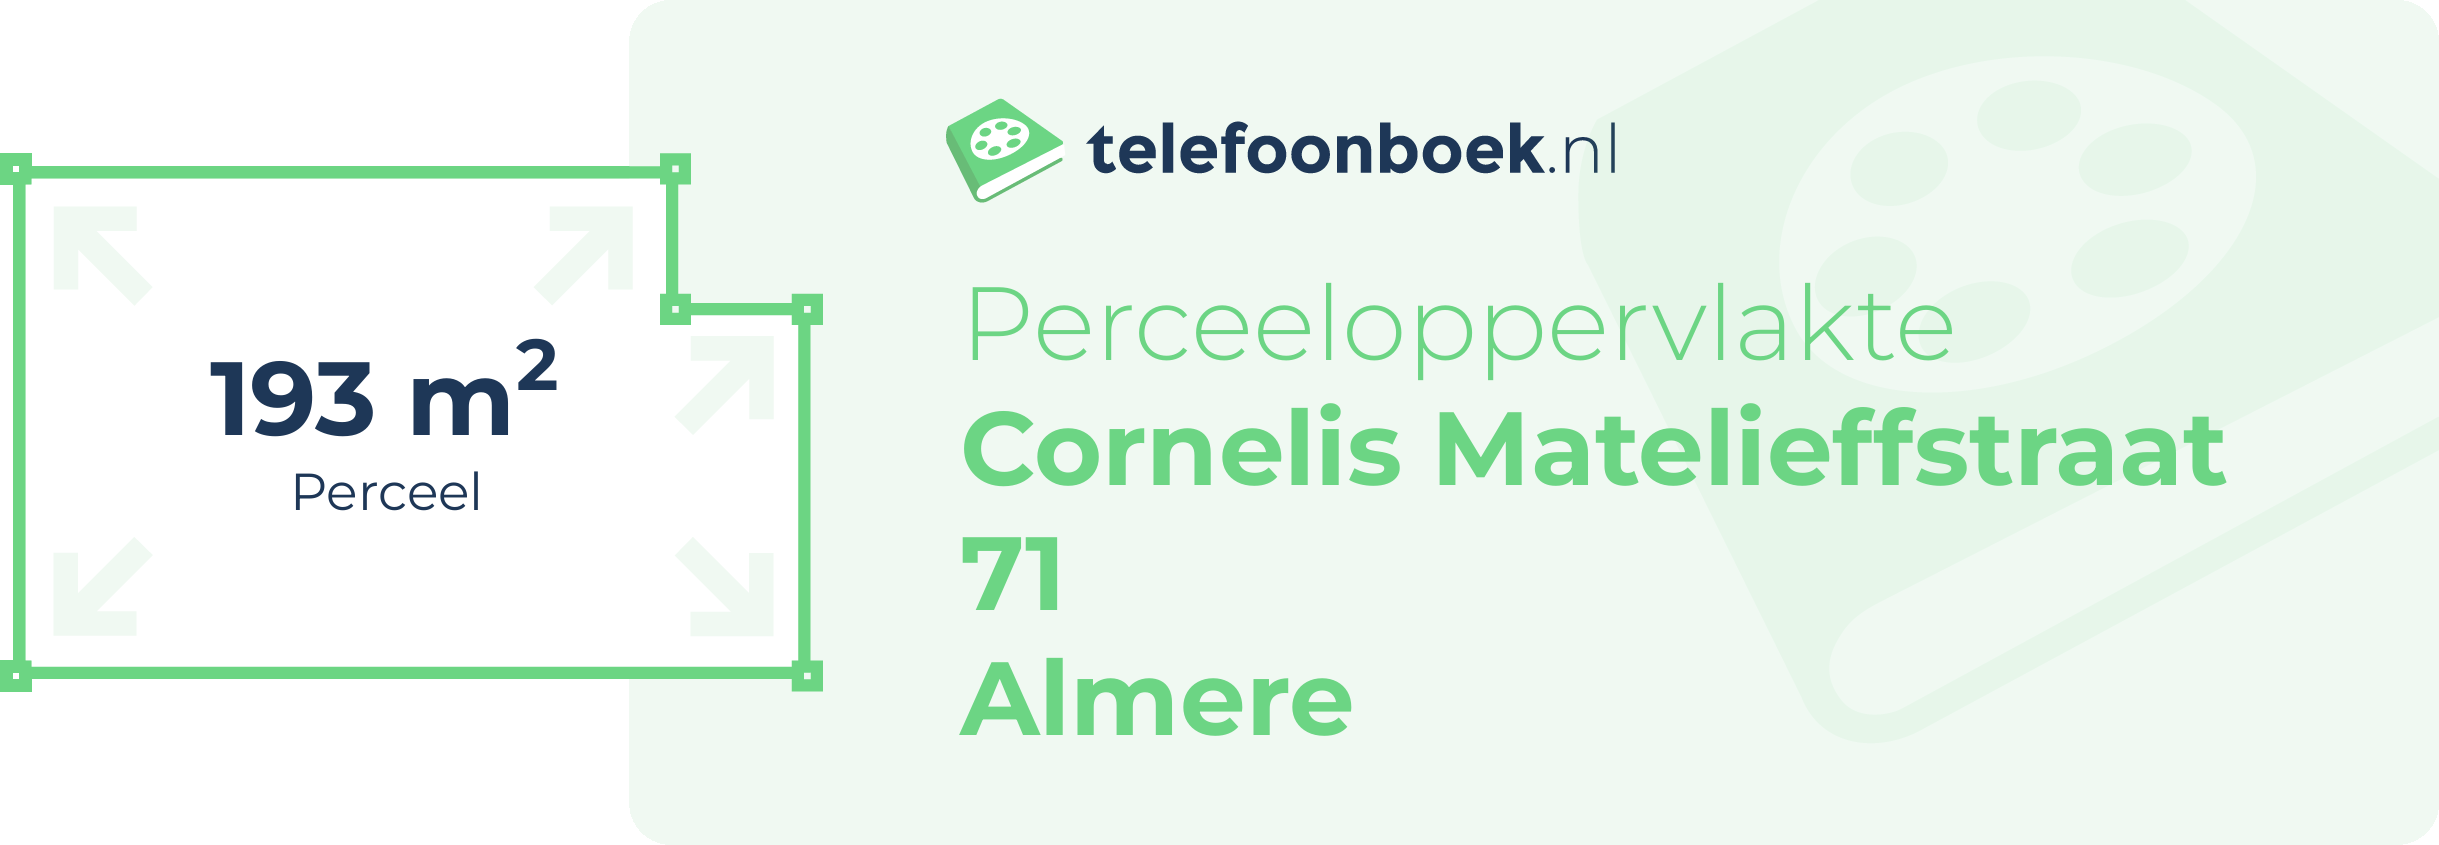 Perceeloppervlakte Cornelis Matelieffstraat 71 Almere